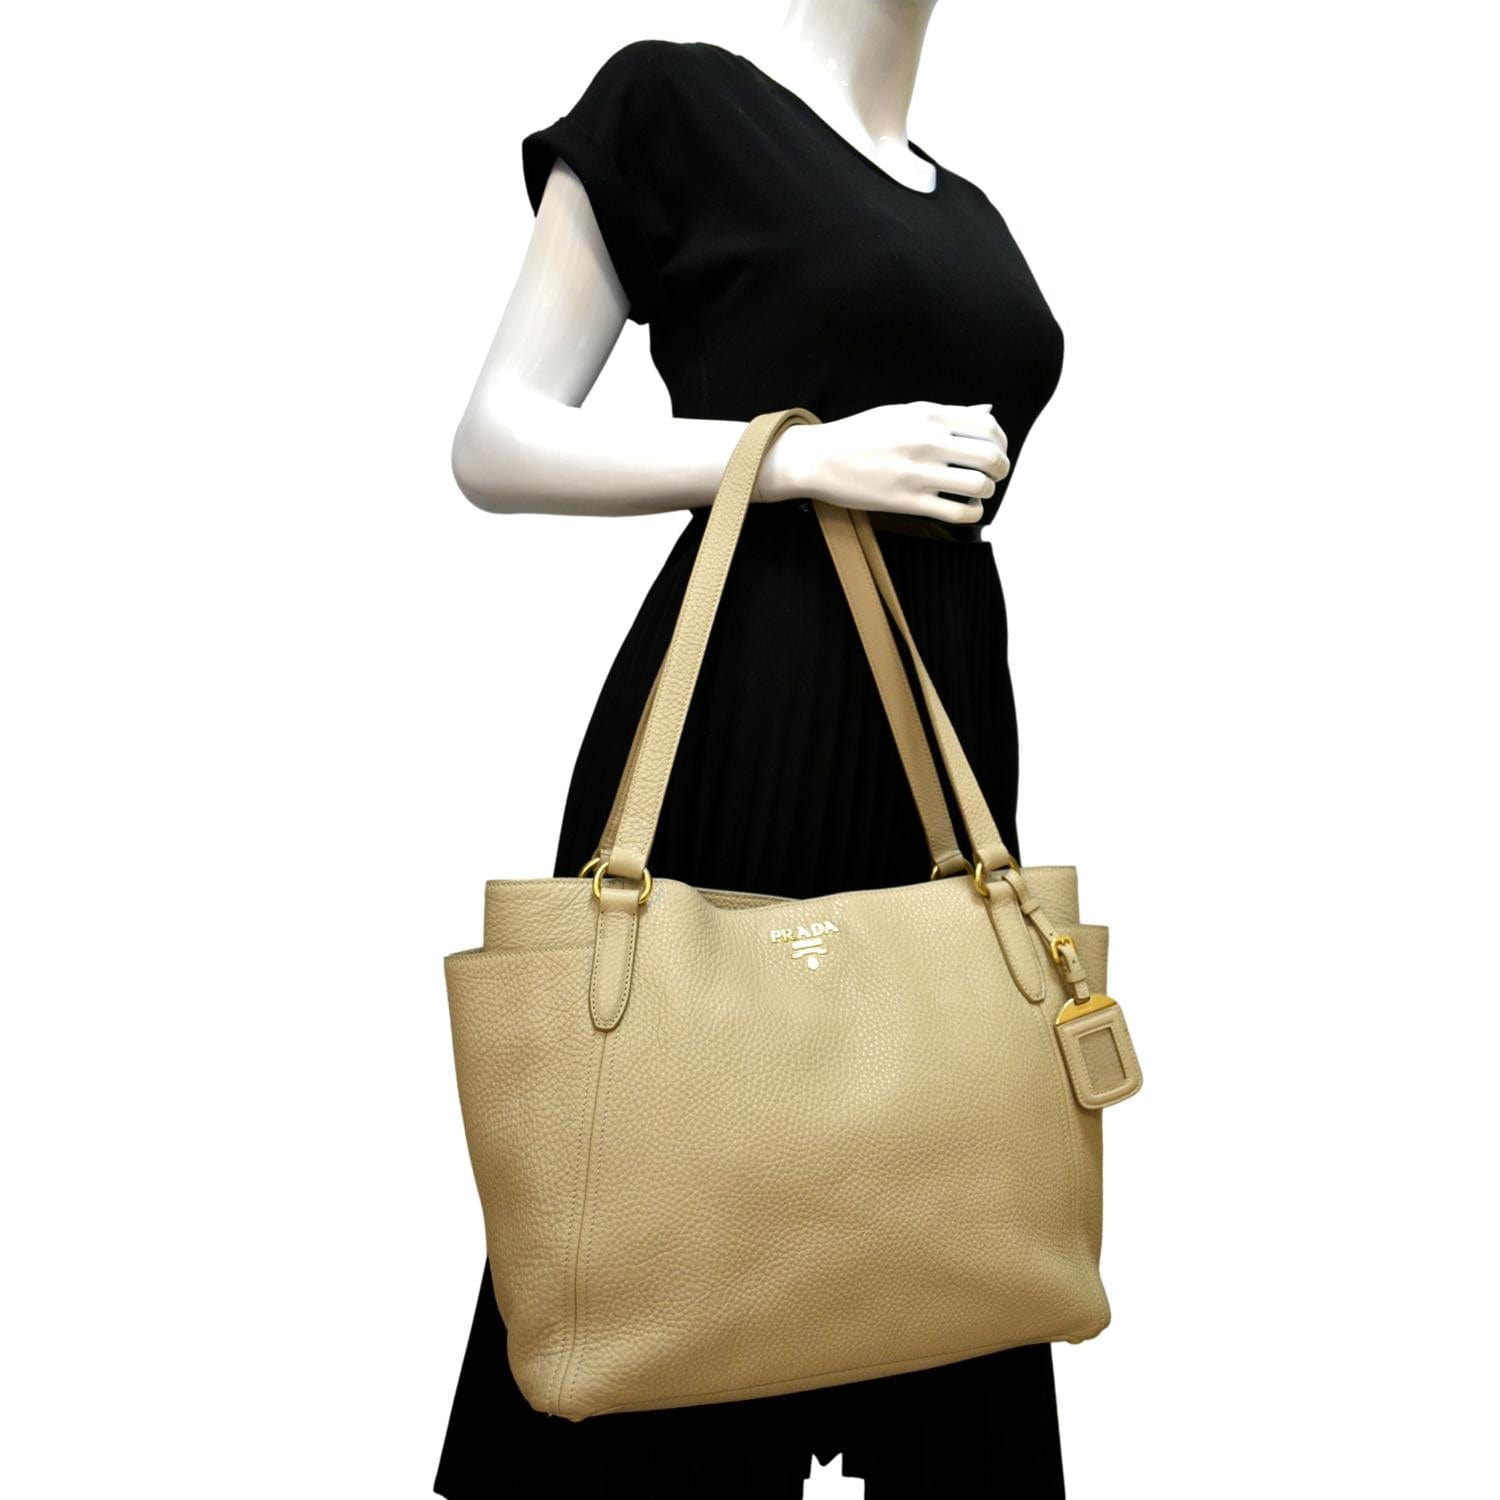 Prada Saffiano Leather Shoulder Bag, Beige